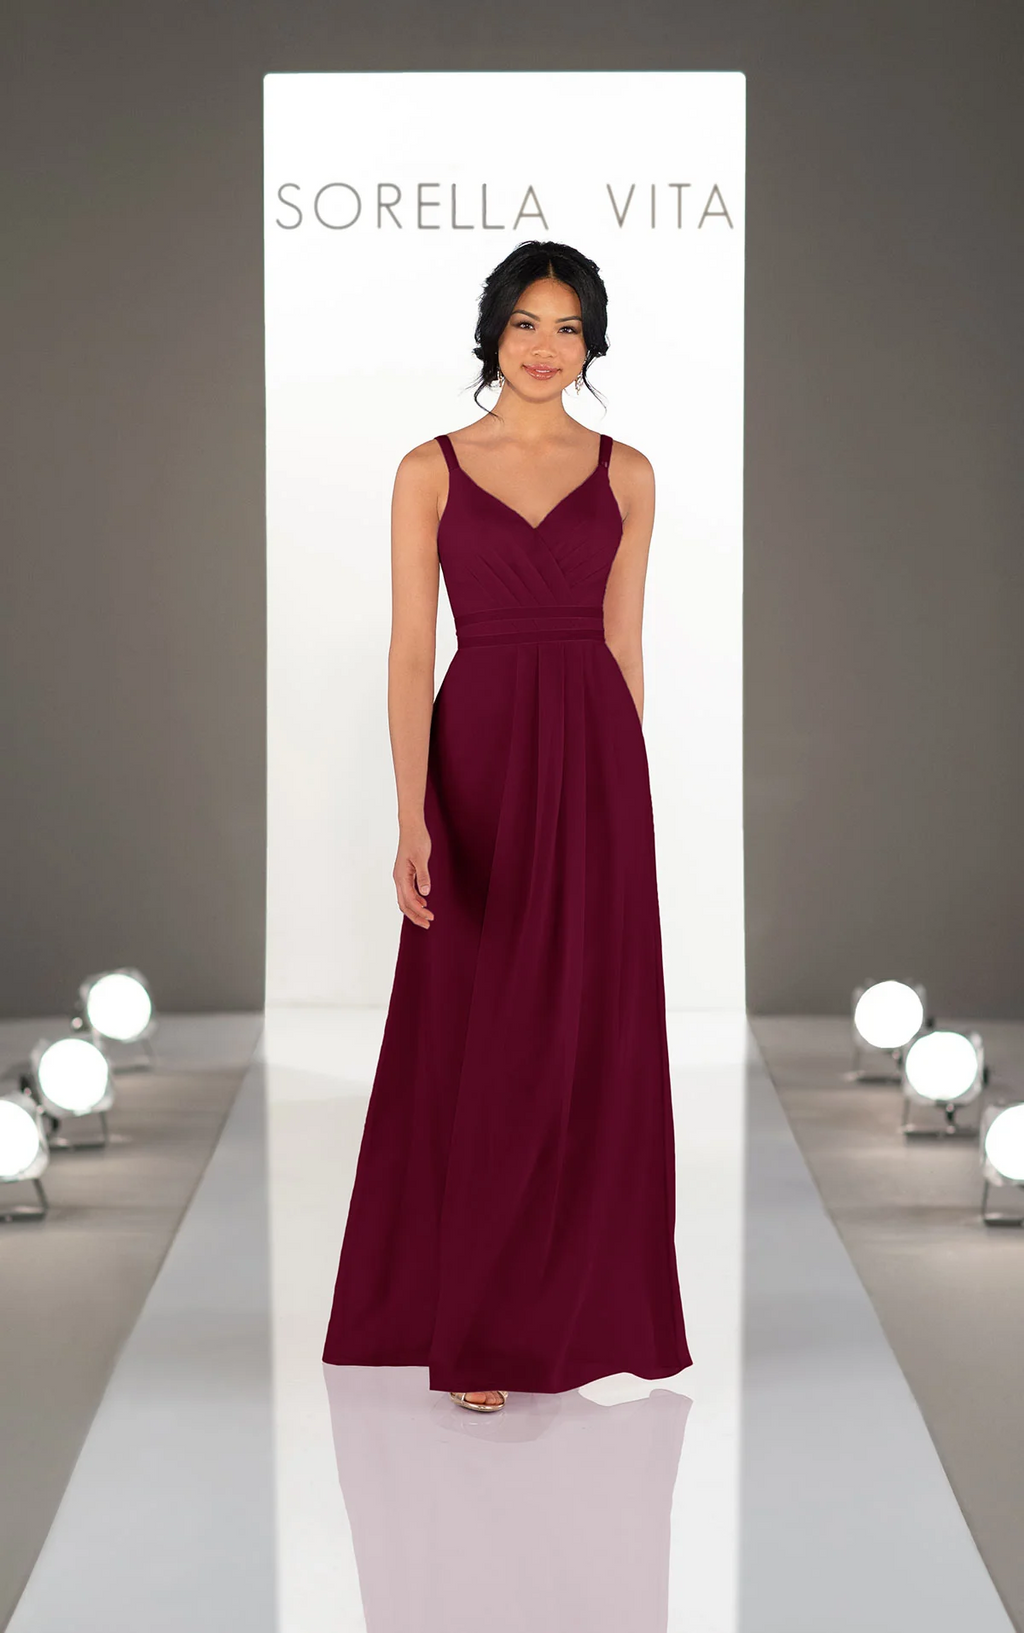 Sorella Vita Dress Style 9250 (Burgundy-Size 12) Prom, Ball., Black-tie, Bridesmaid, Pageant